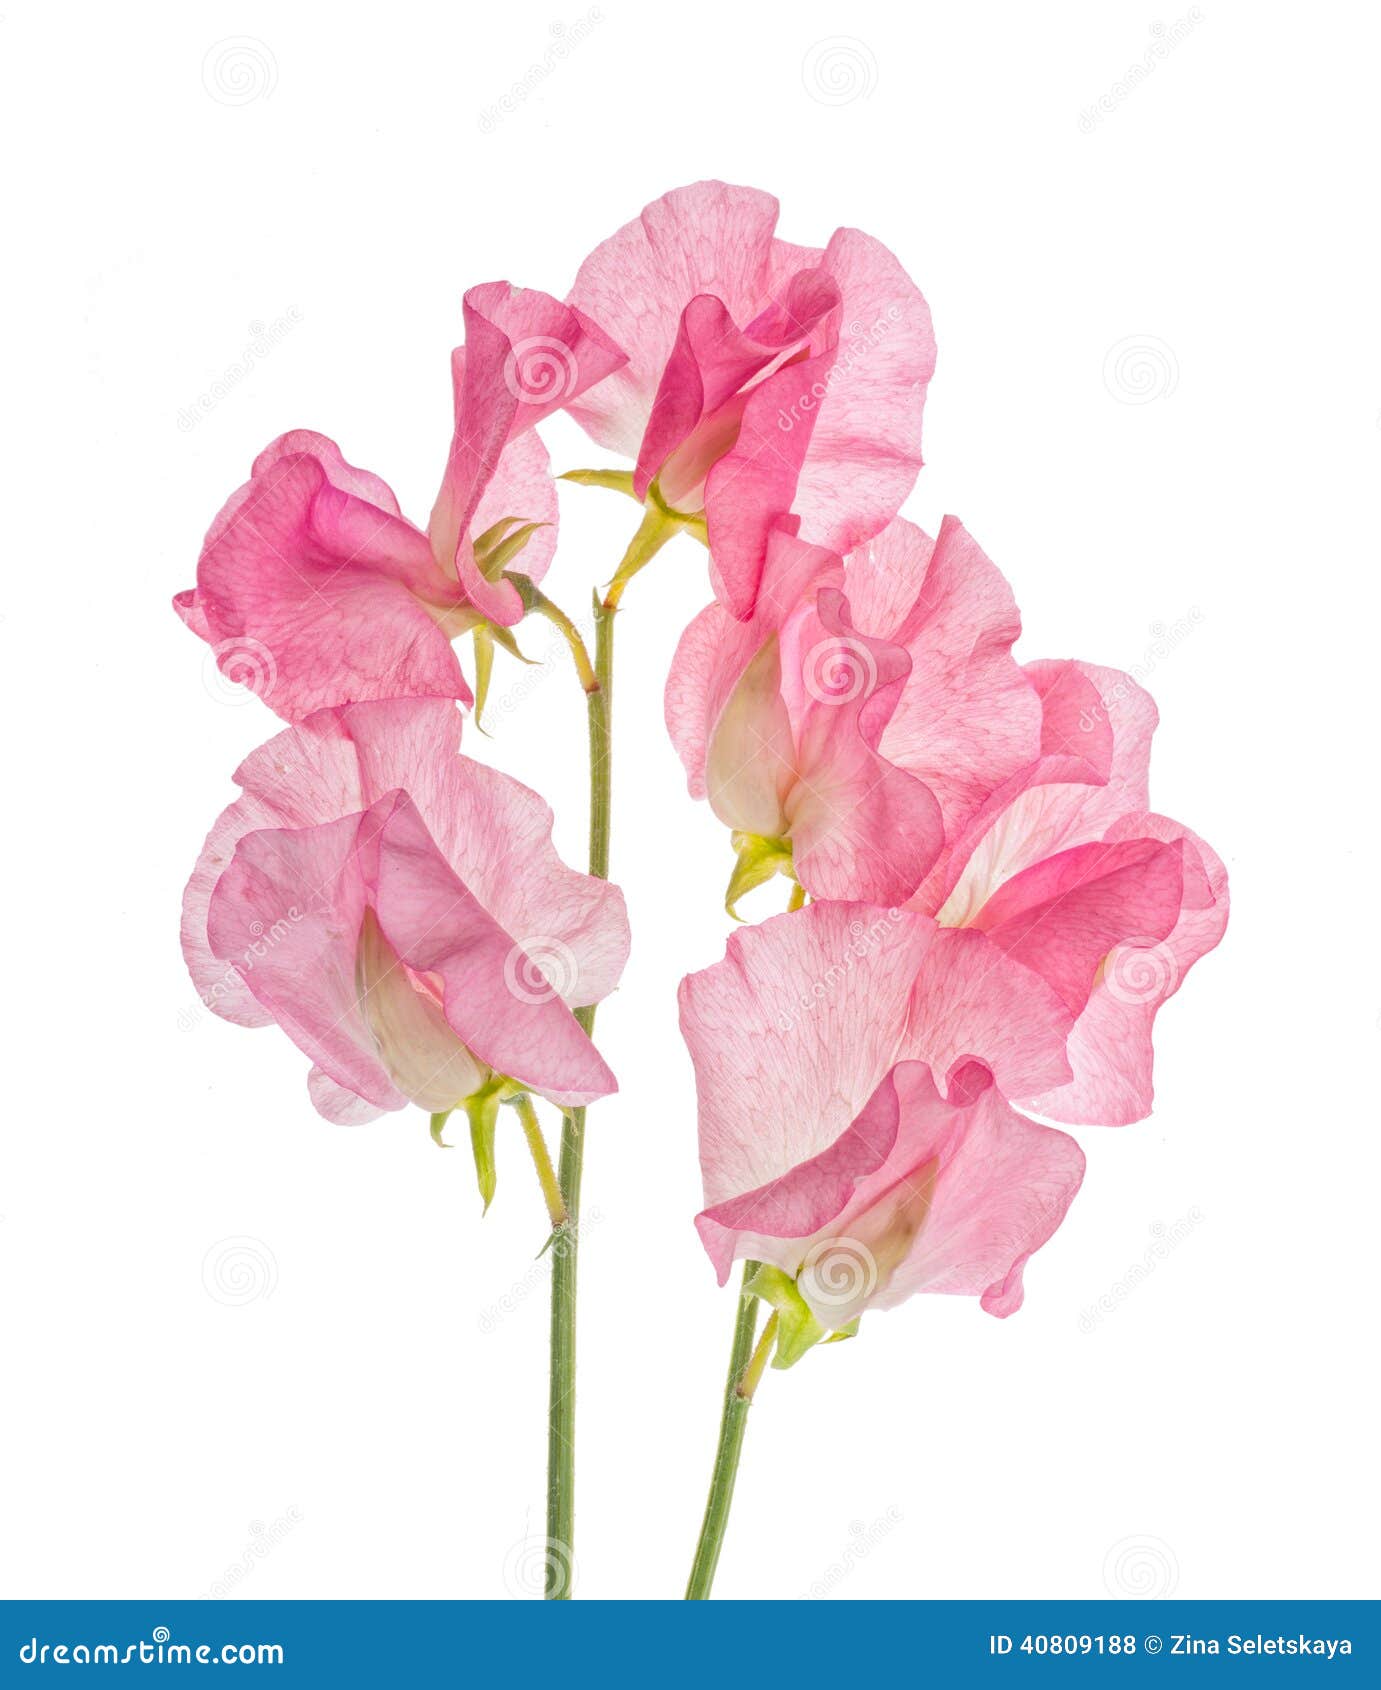 Flor del guisante dulce foto de archivo. Imagen de planta - 40809188